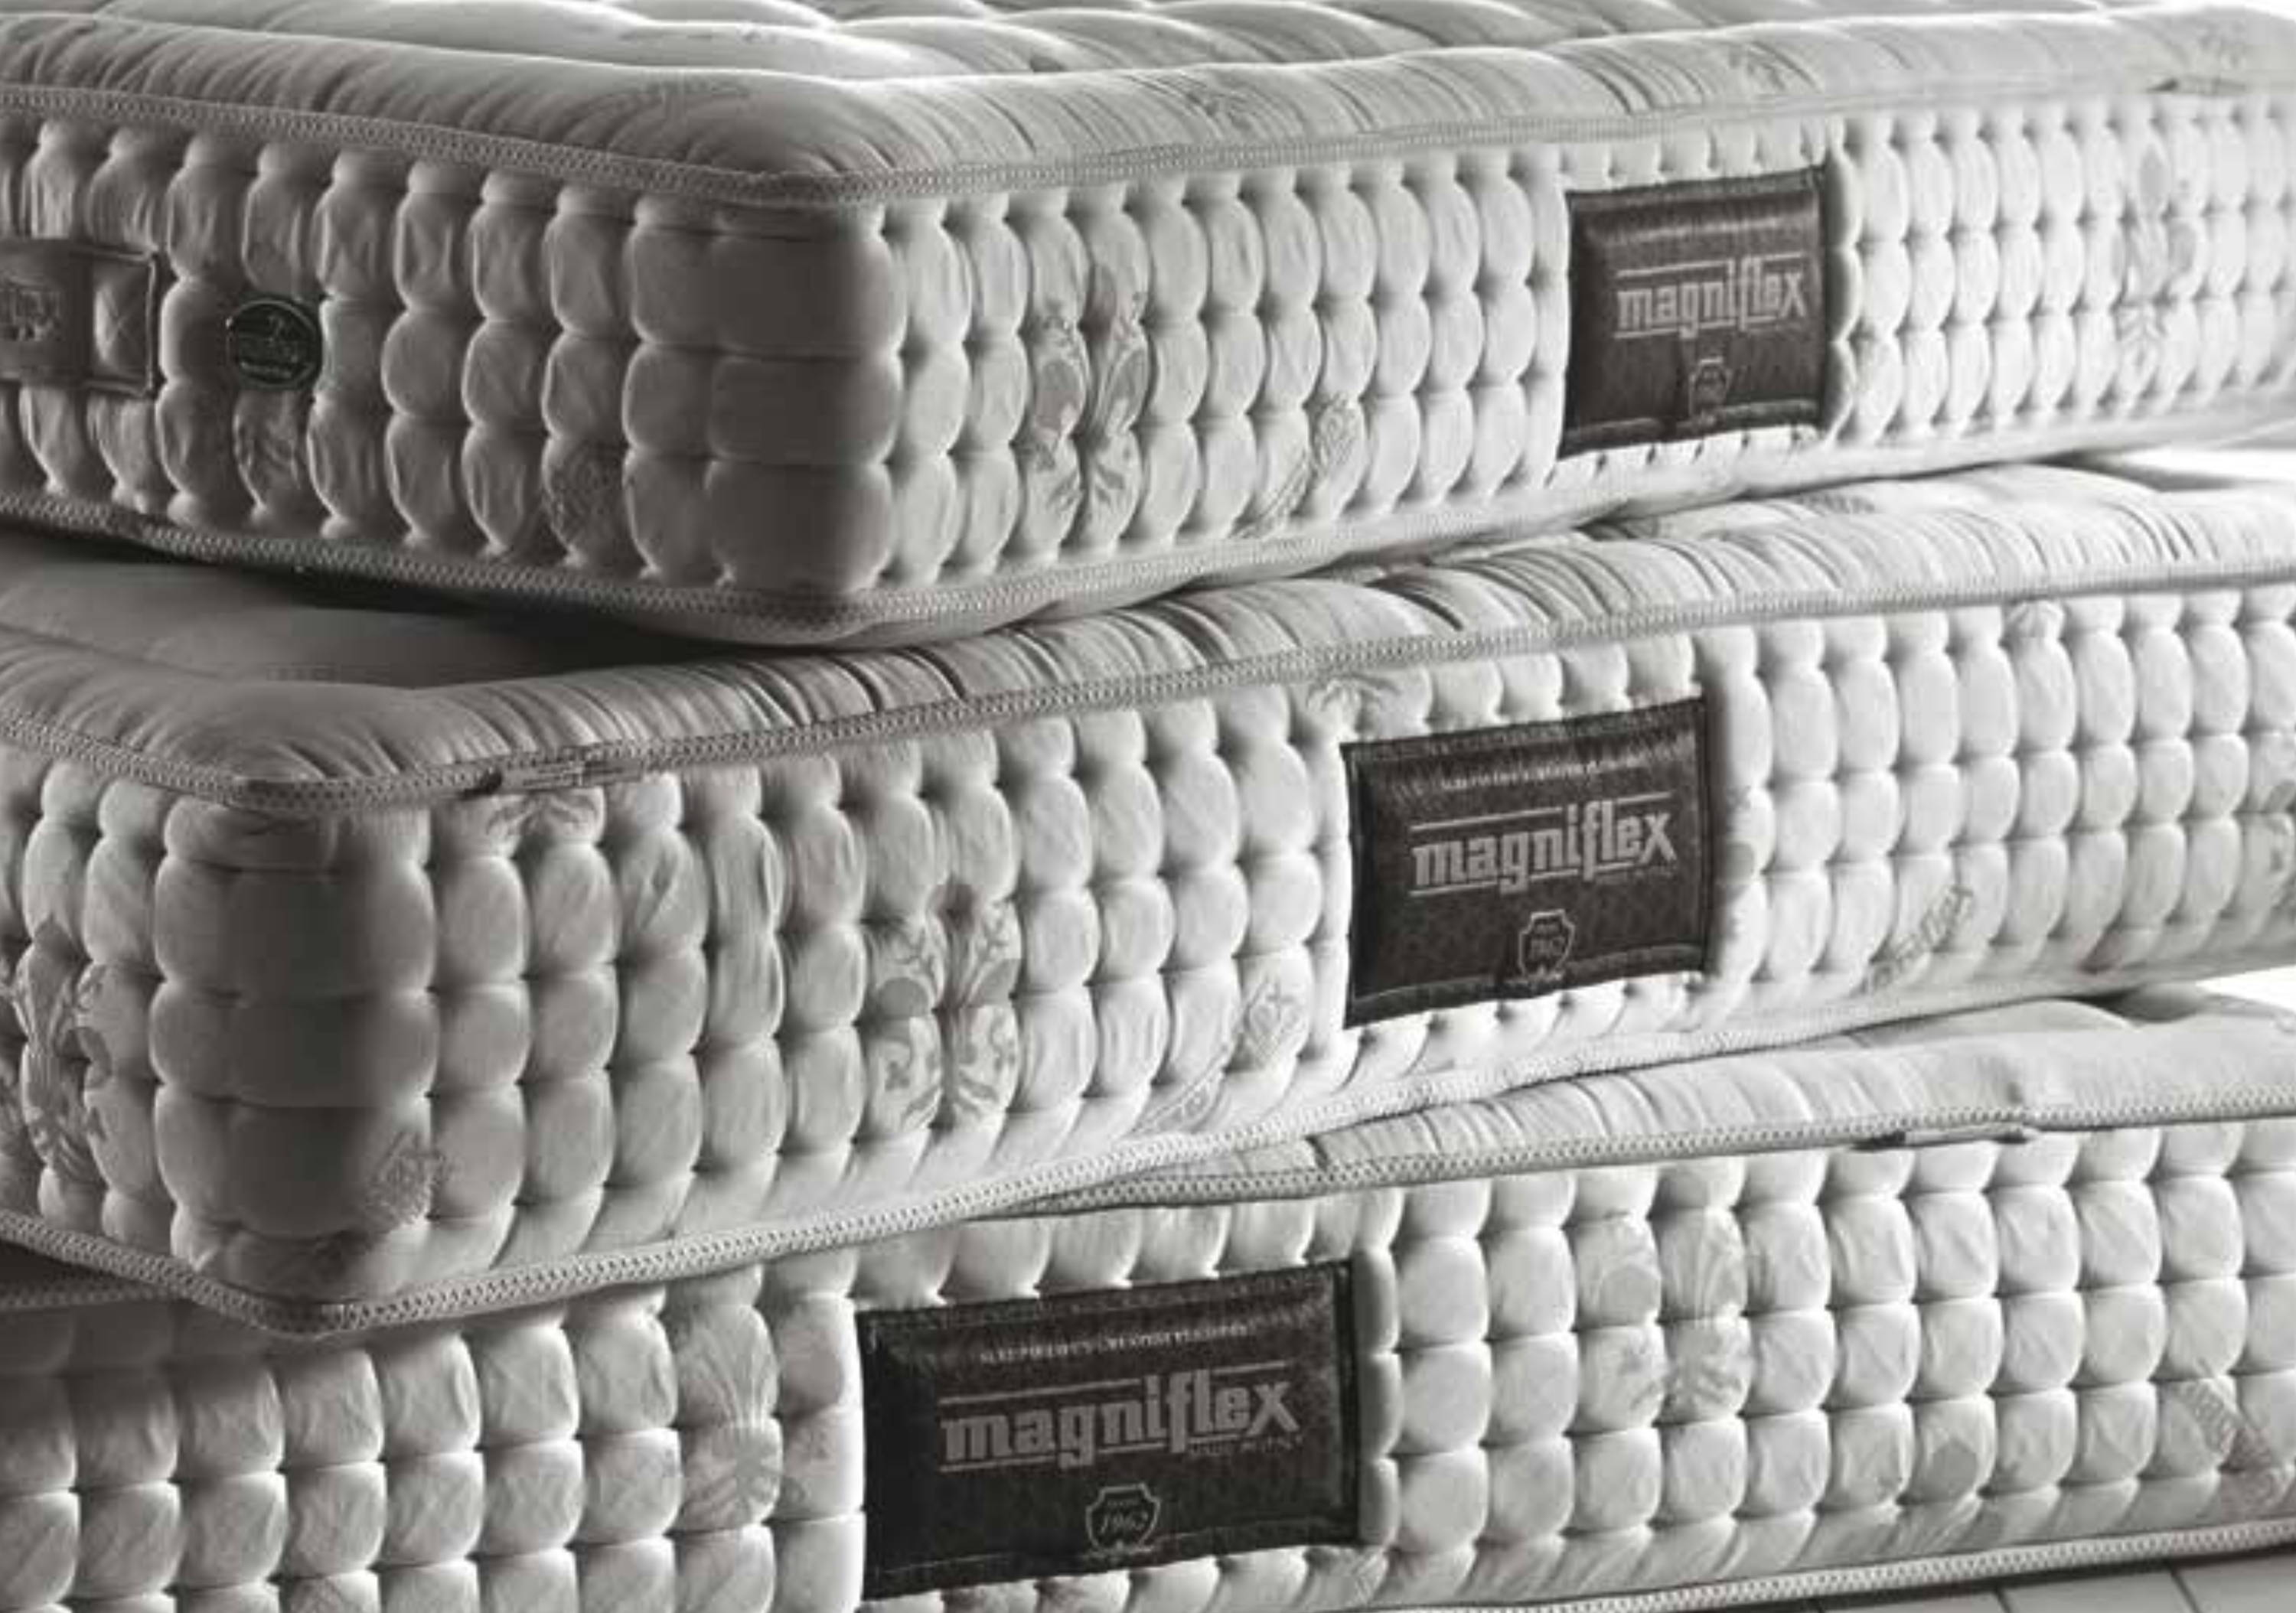 magniflex memory foam mattress uk